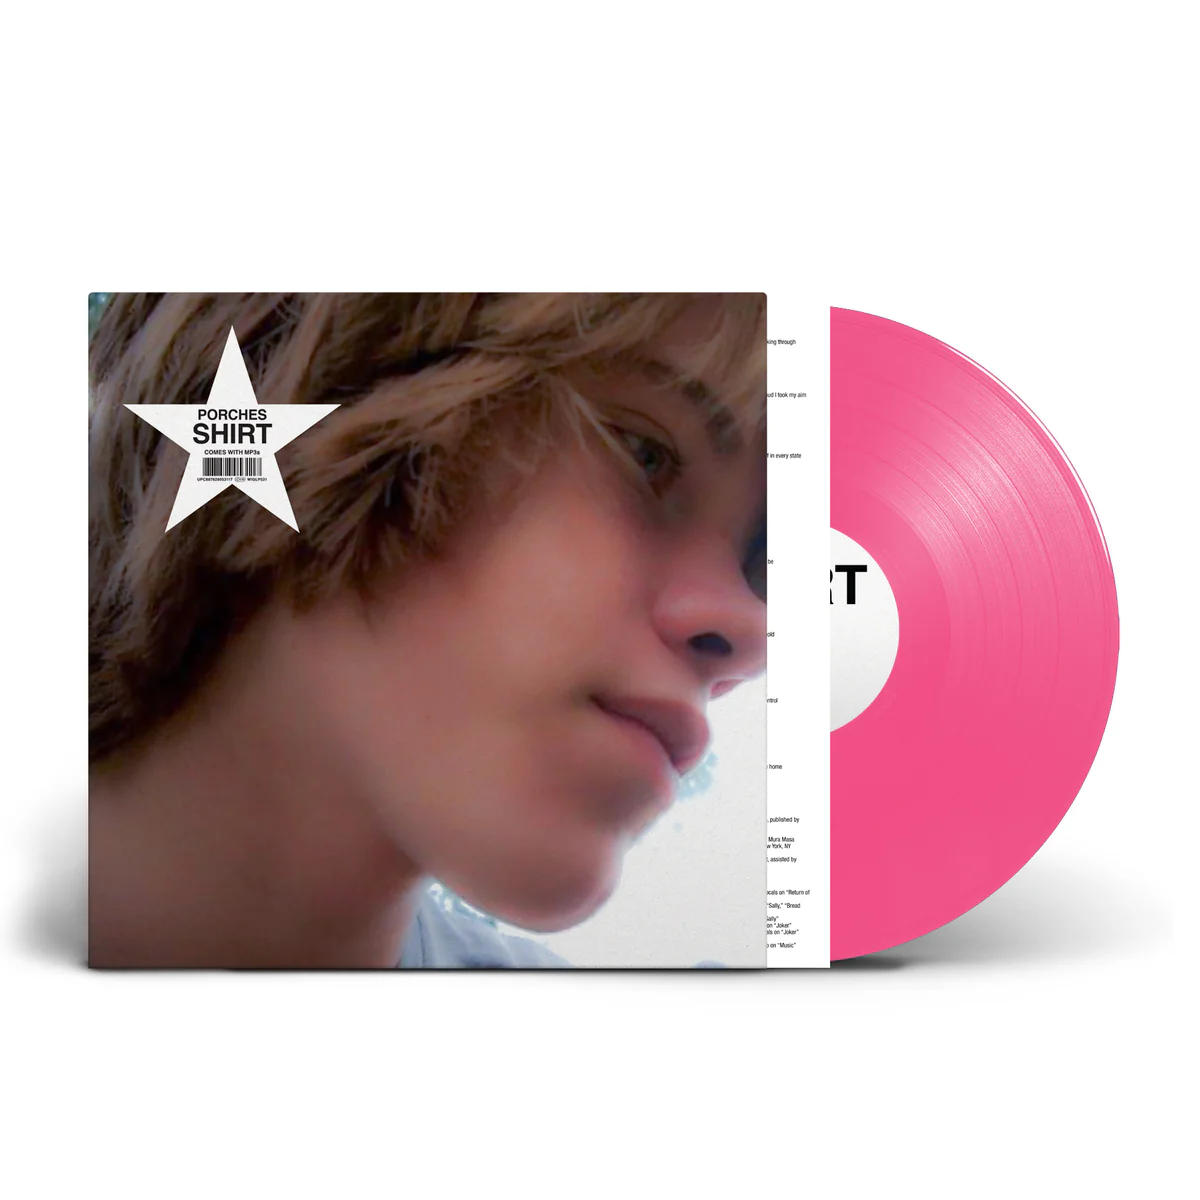 Porches - Shirt: Limited 'Precious Pink' Vinyl LP